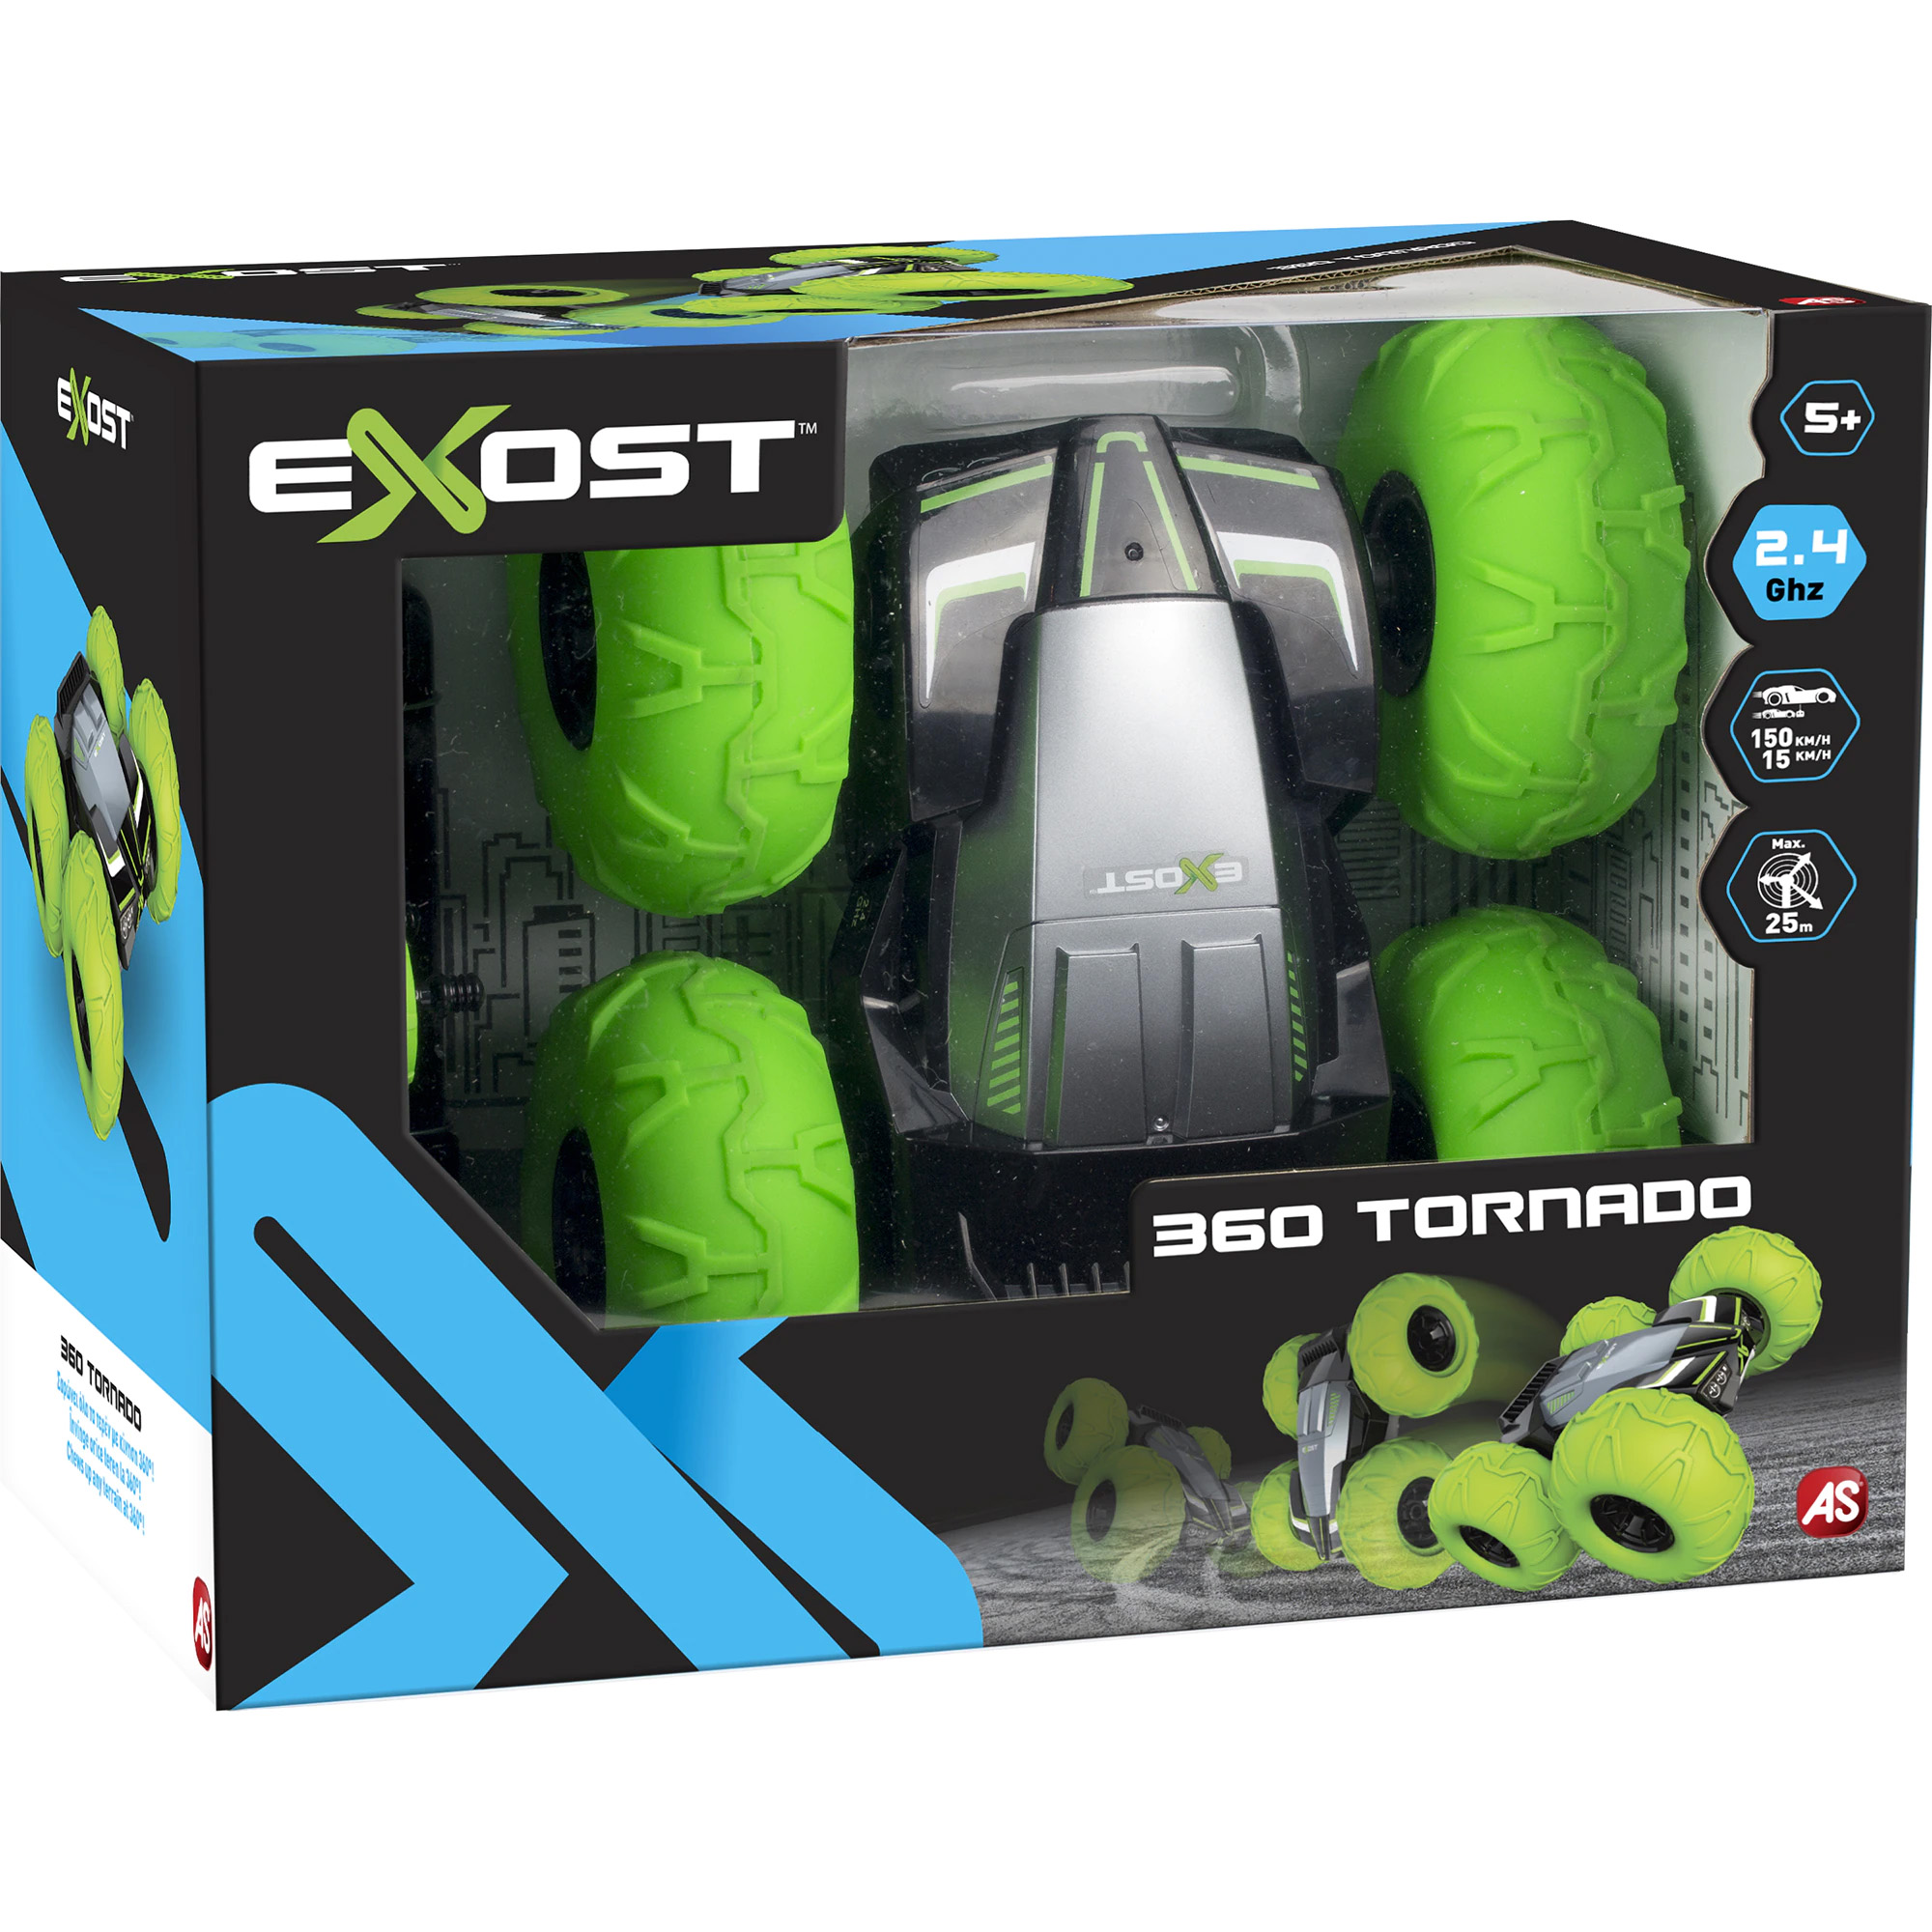 Masina cu radiocomanda - Exost - 360 Tornado, verde | As image